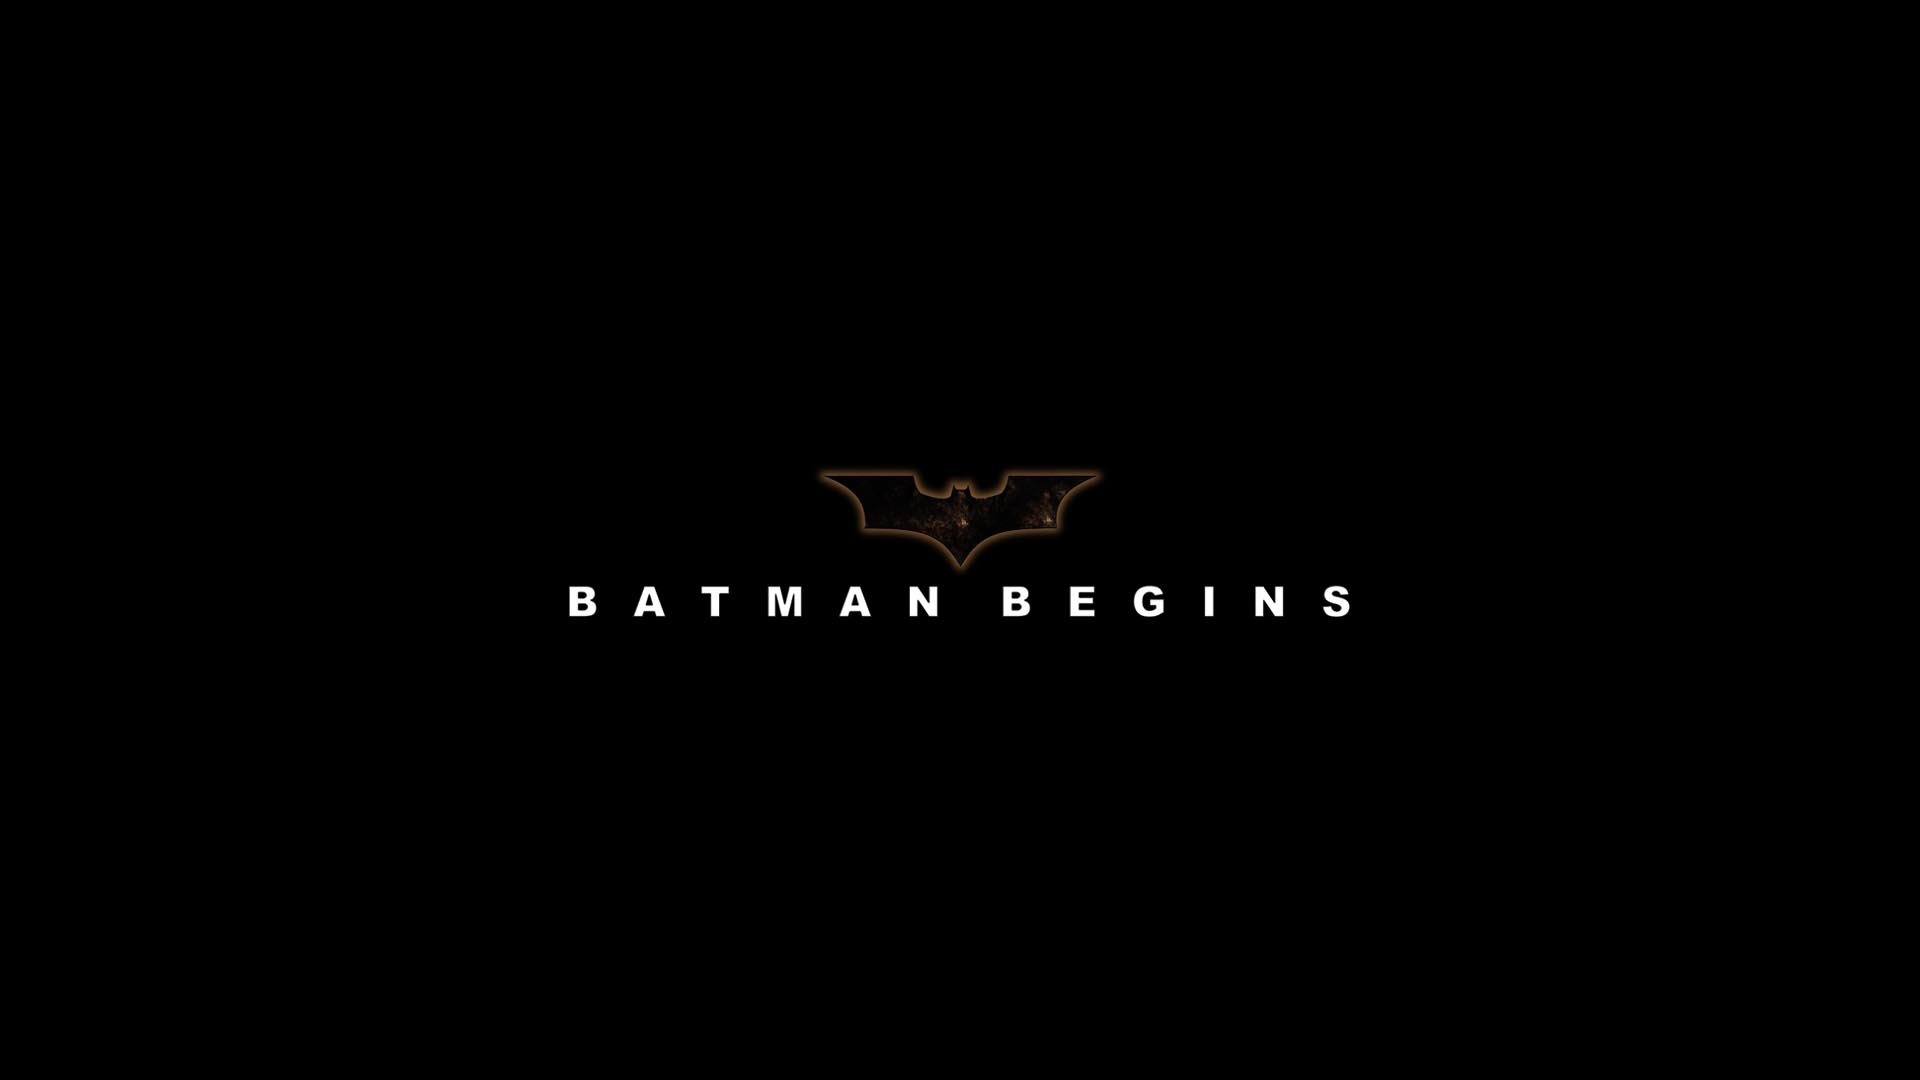 Batman Begins wallpaper 1920x1080 Full HD (1080p) desktop background